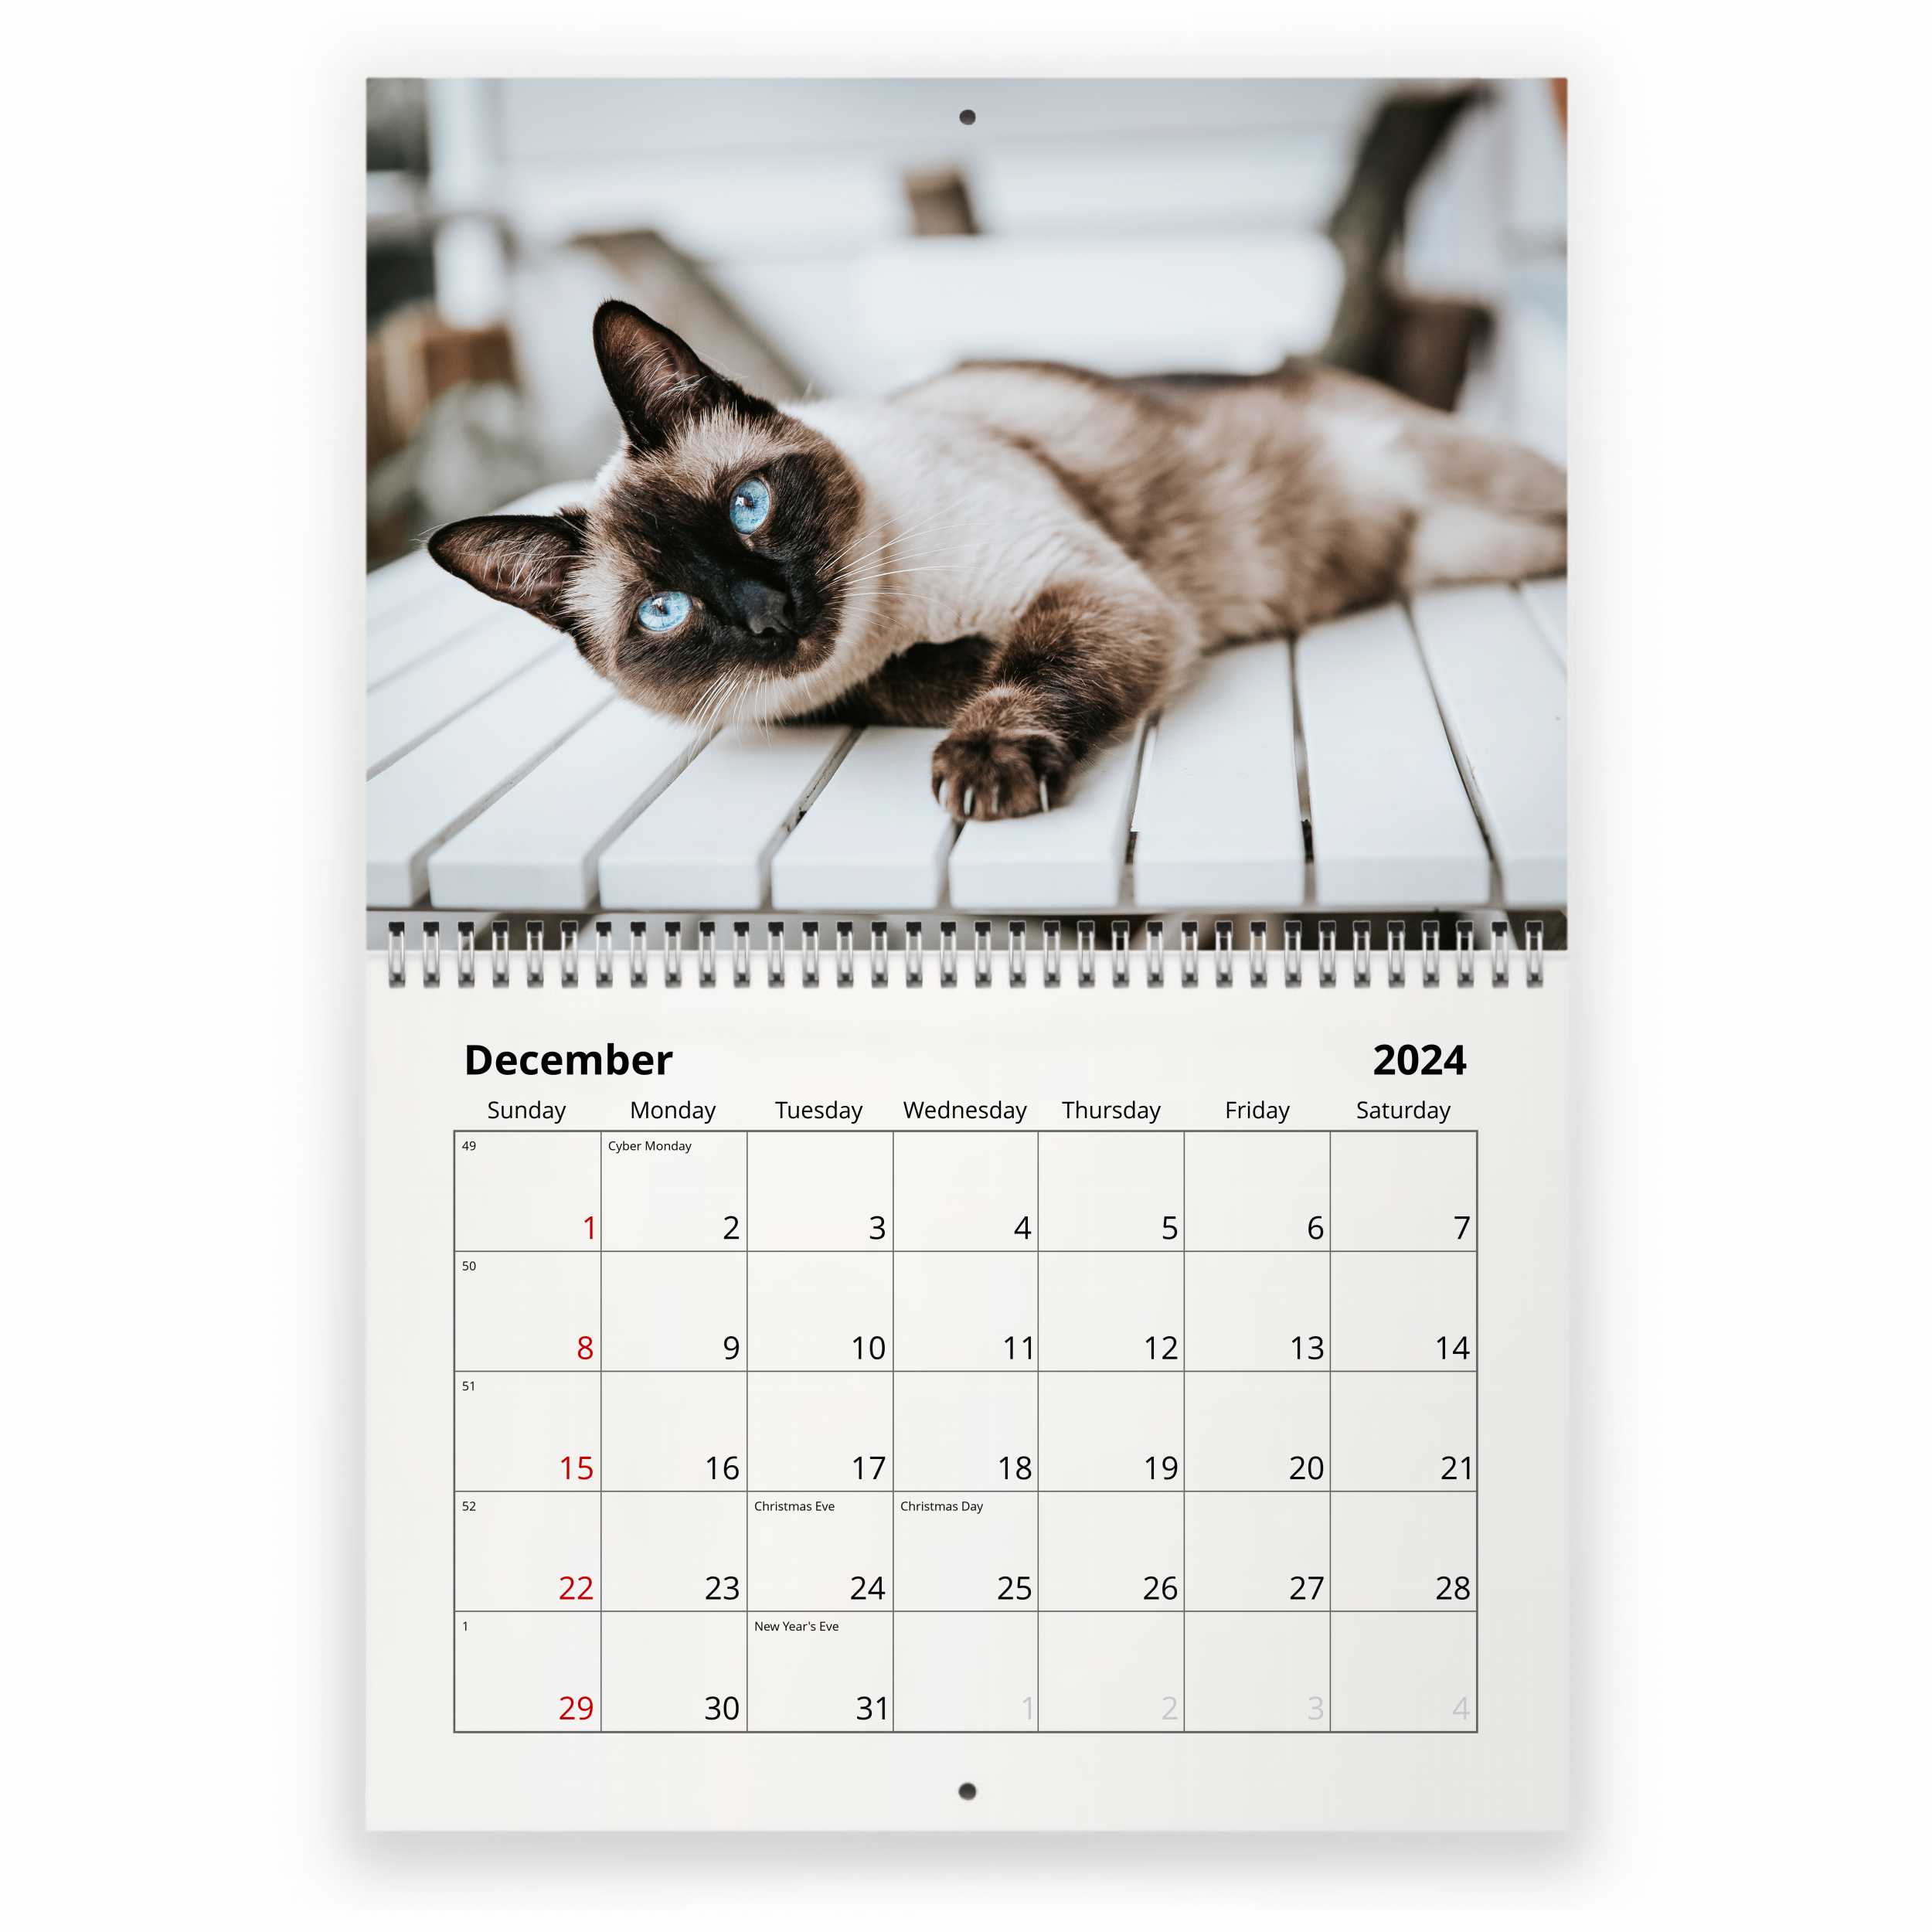 Calendrier artistique de chat siamois 2024, peinture calendrier